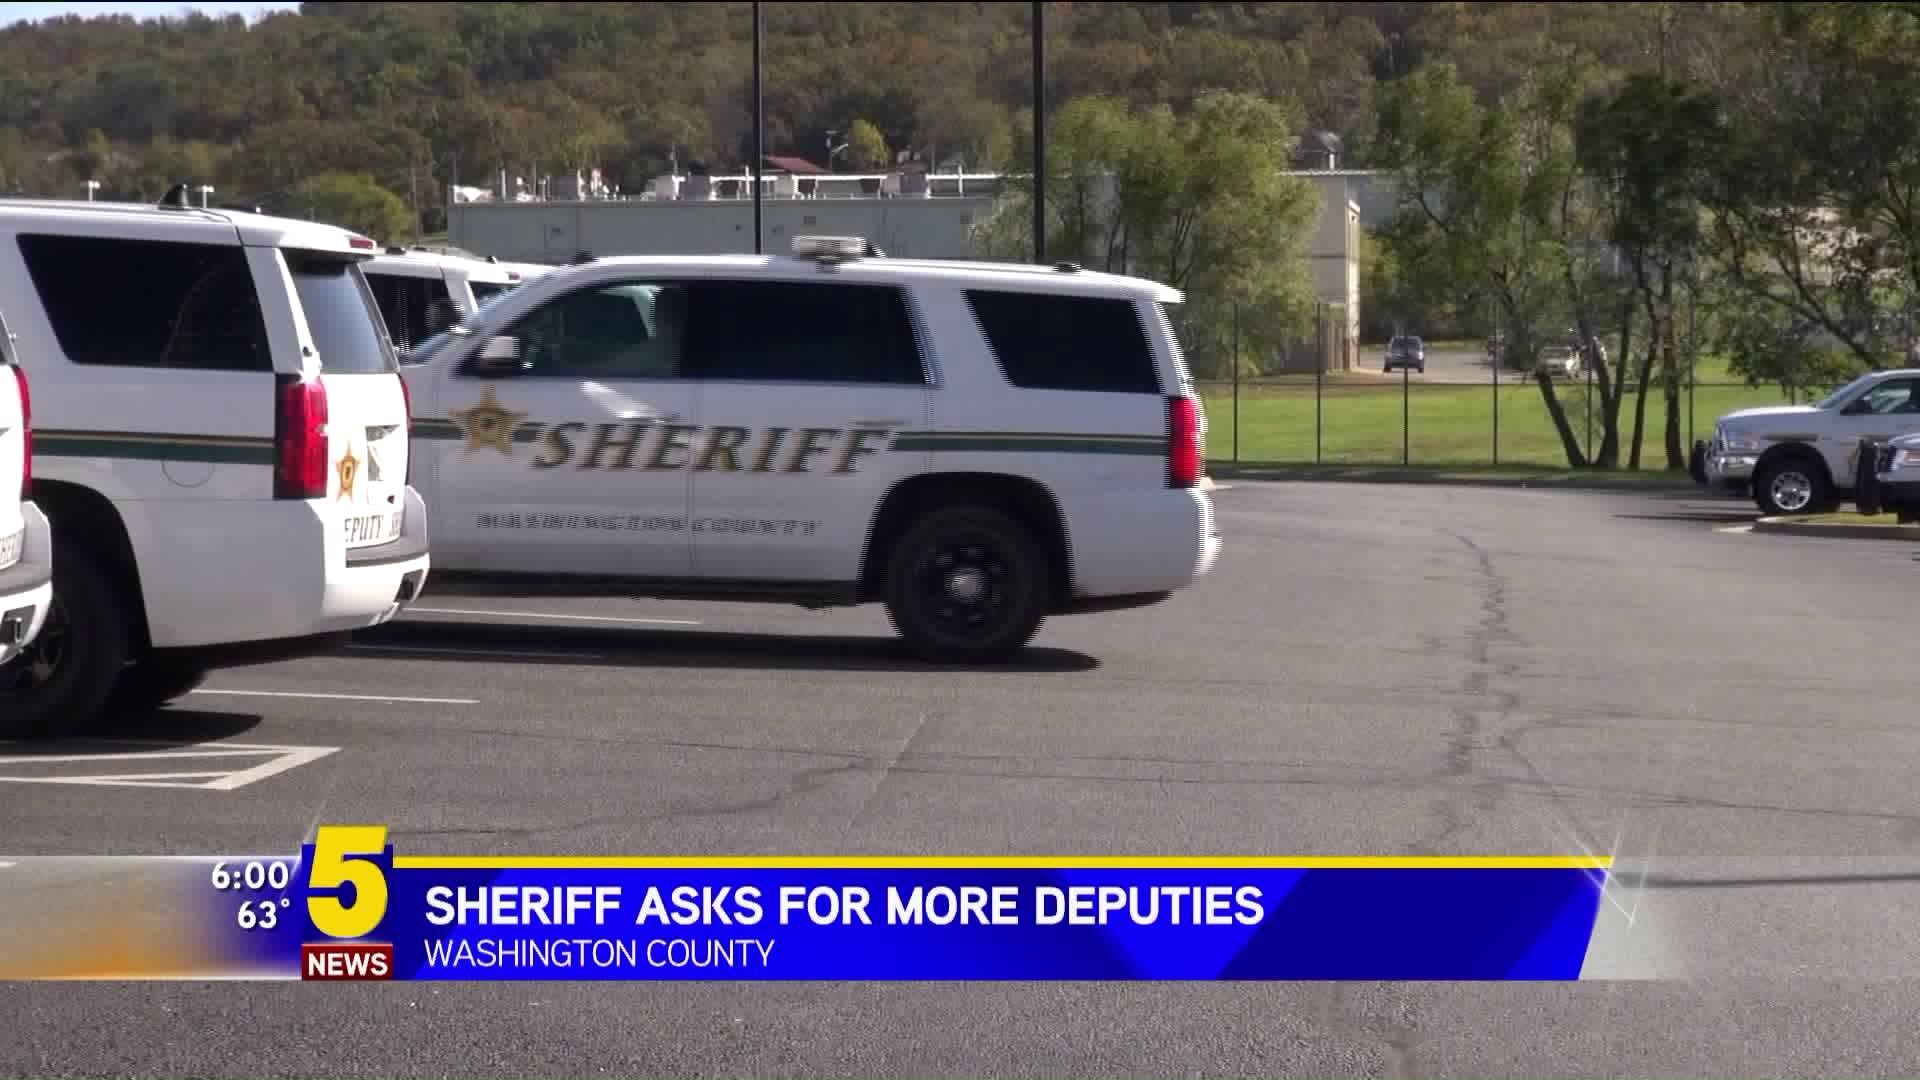 Sheriff Asks For More Deputies